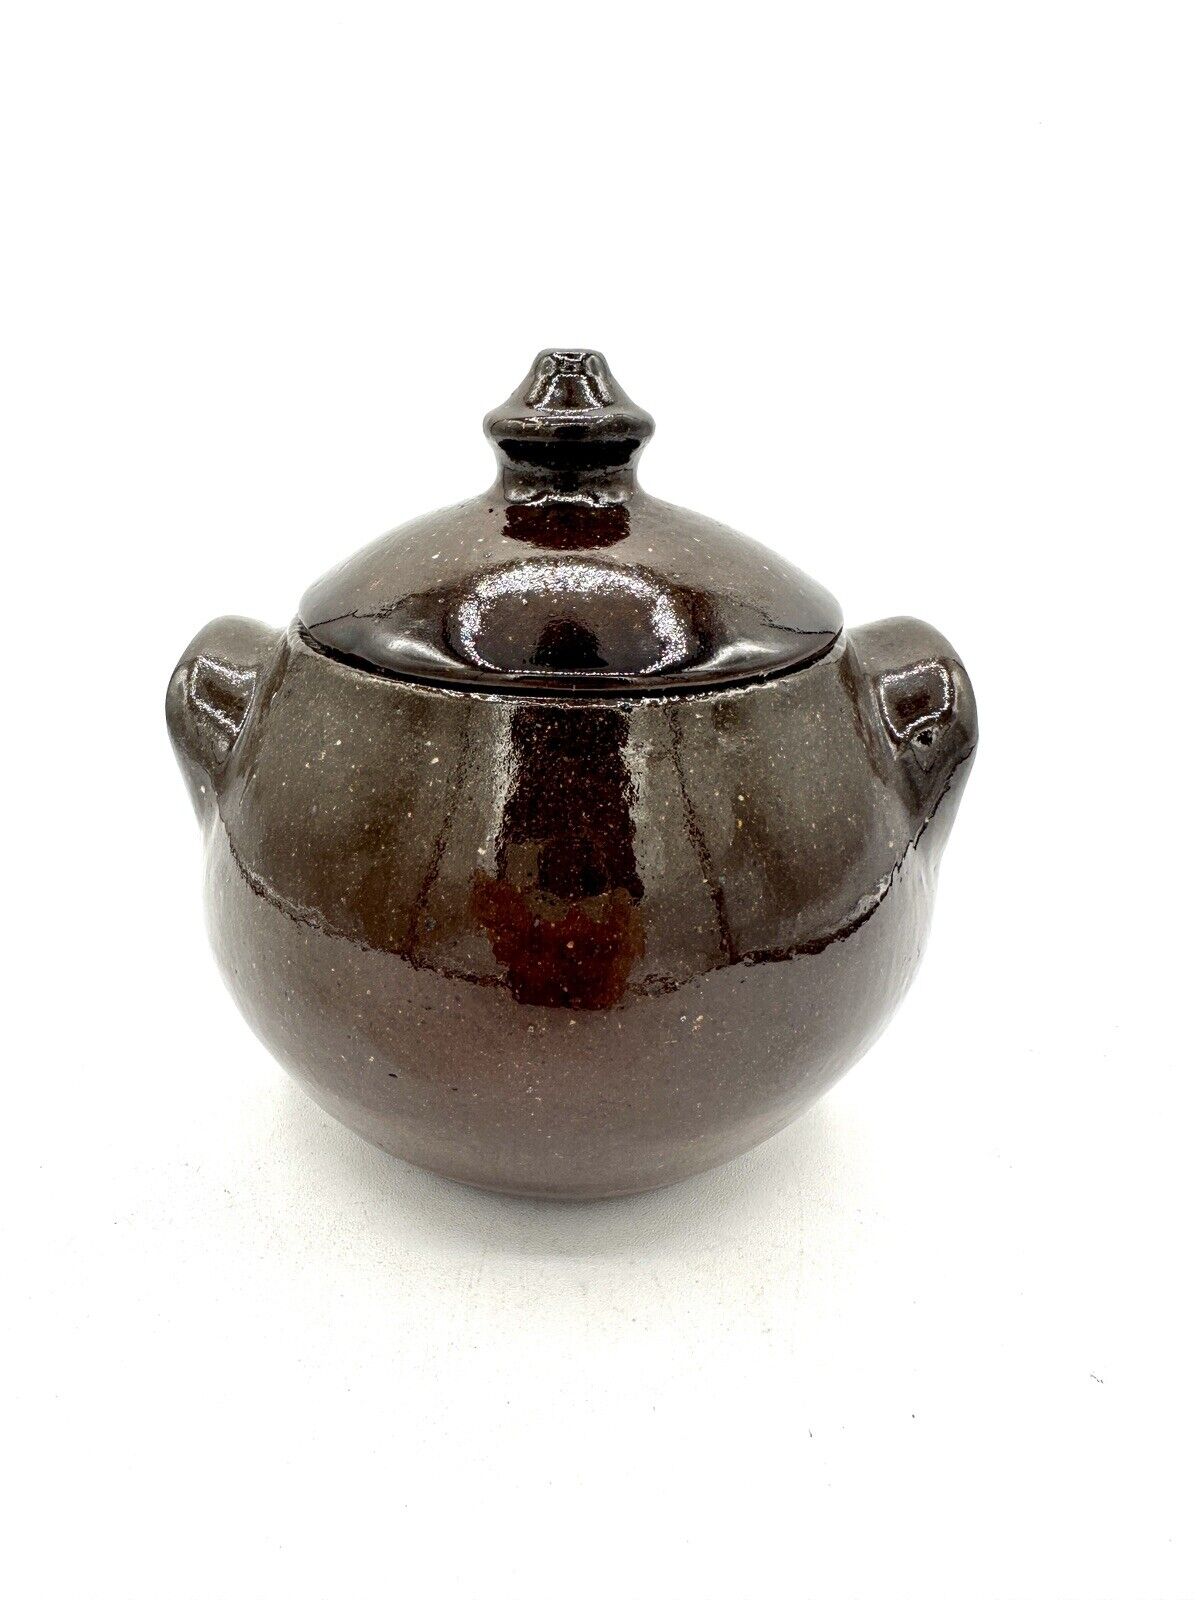 Ben Owen Master Potter 1960s Brown Sugar Bowl Lidded Pot NC Seagrove Pottery